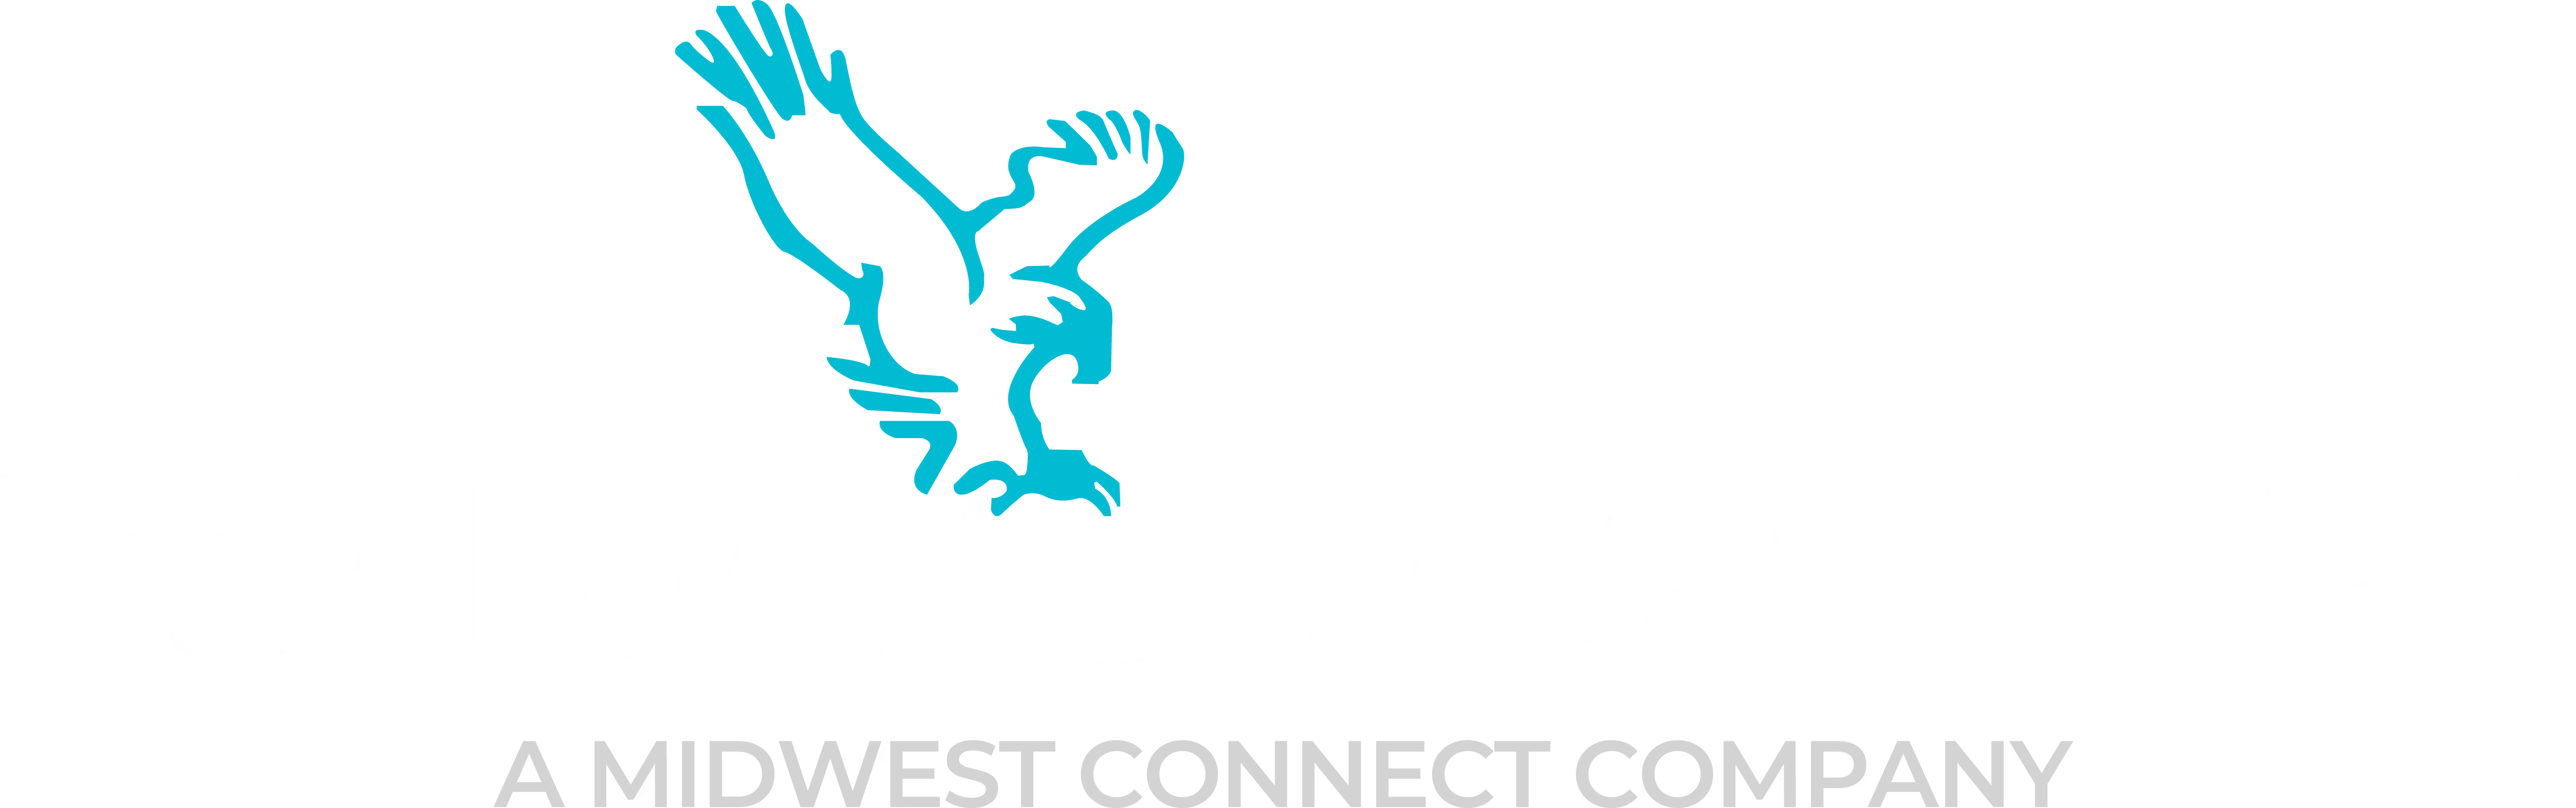 Rocky Mountain Mail logo